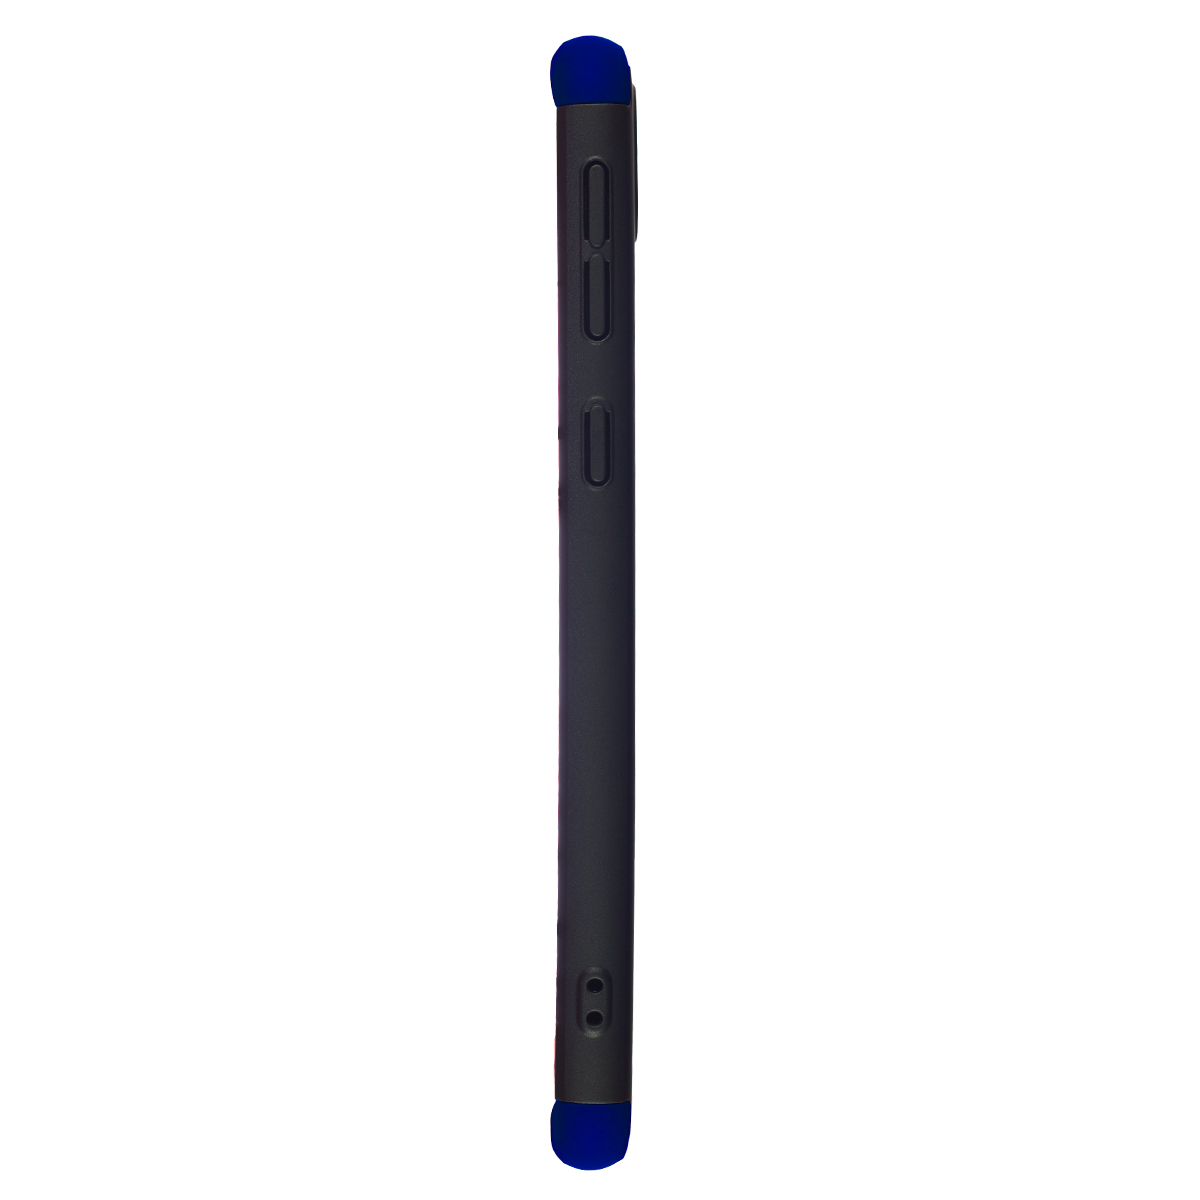 Husa Hard 360 Samsung Galaxy M20, Albastru GKK thumb